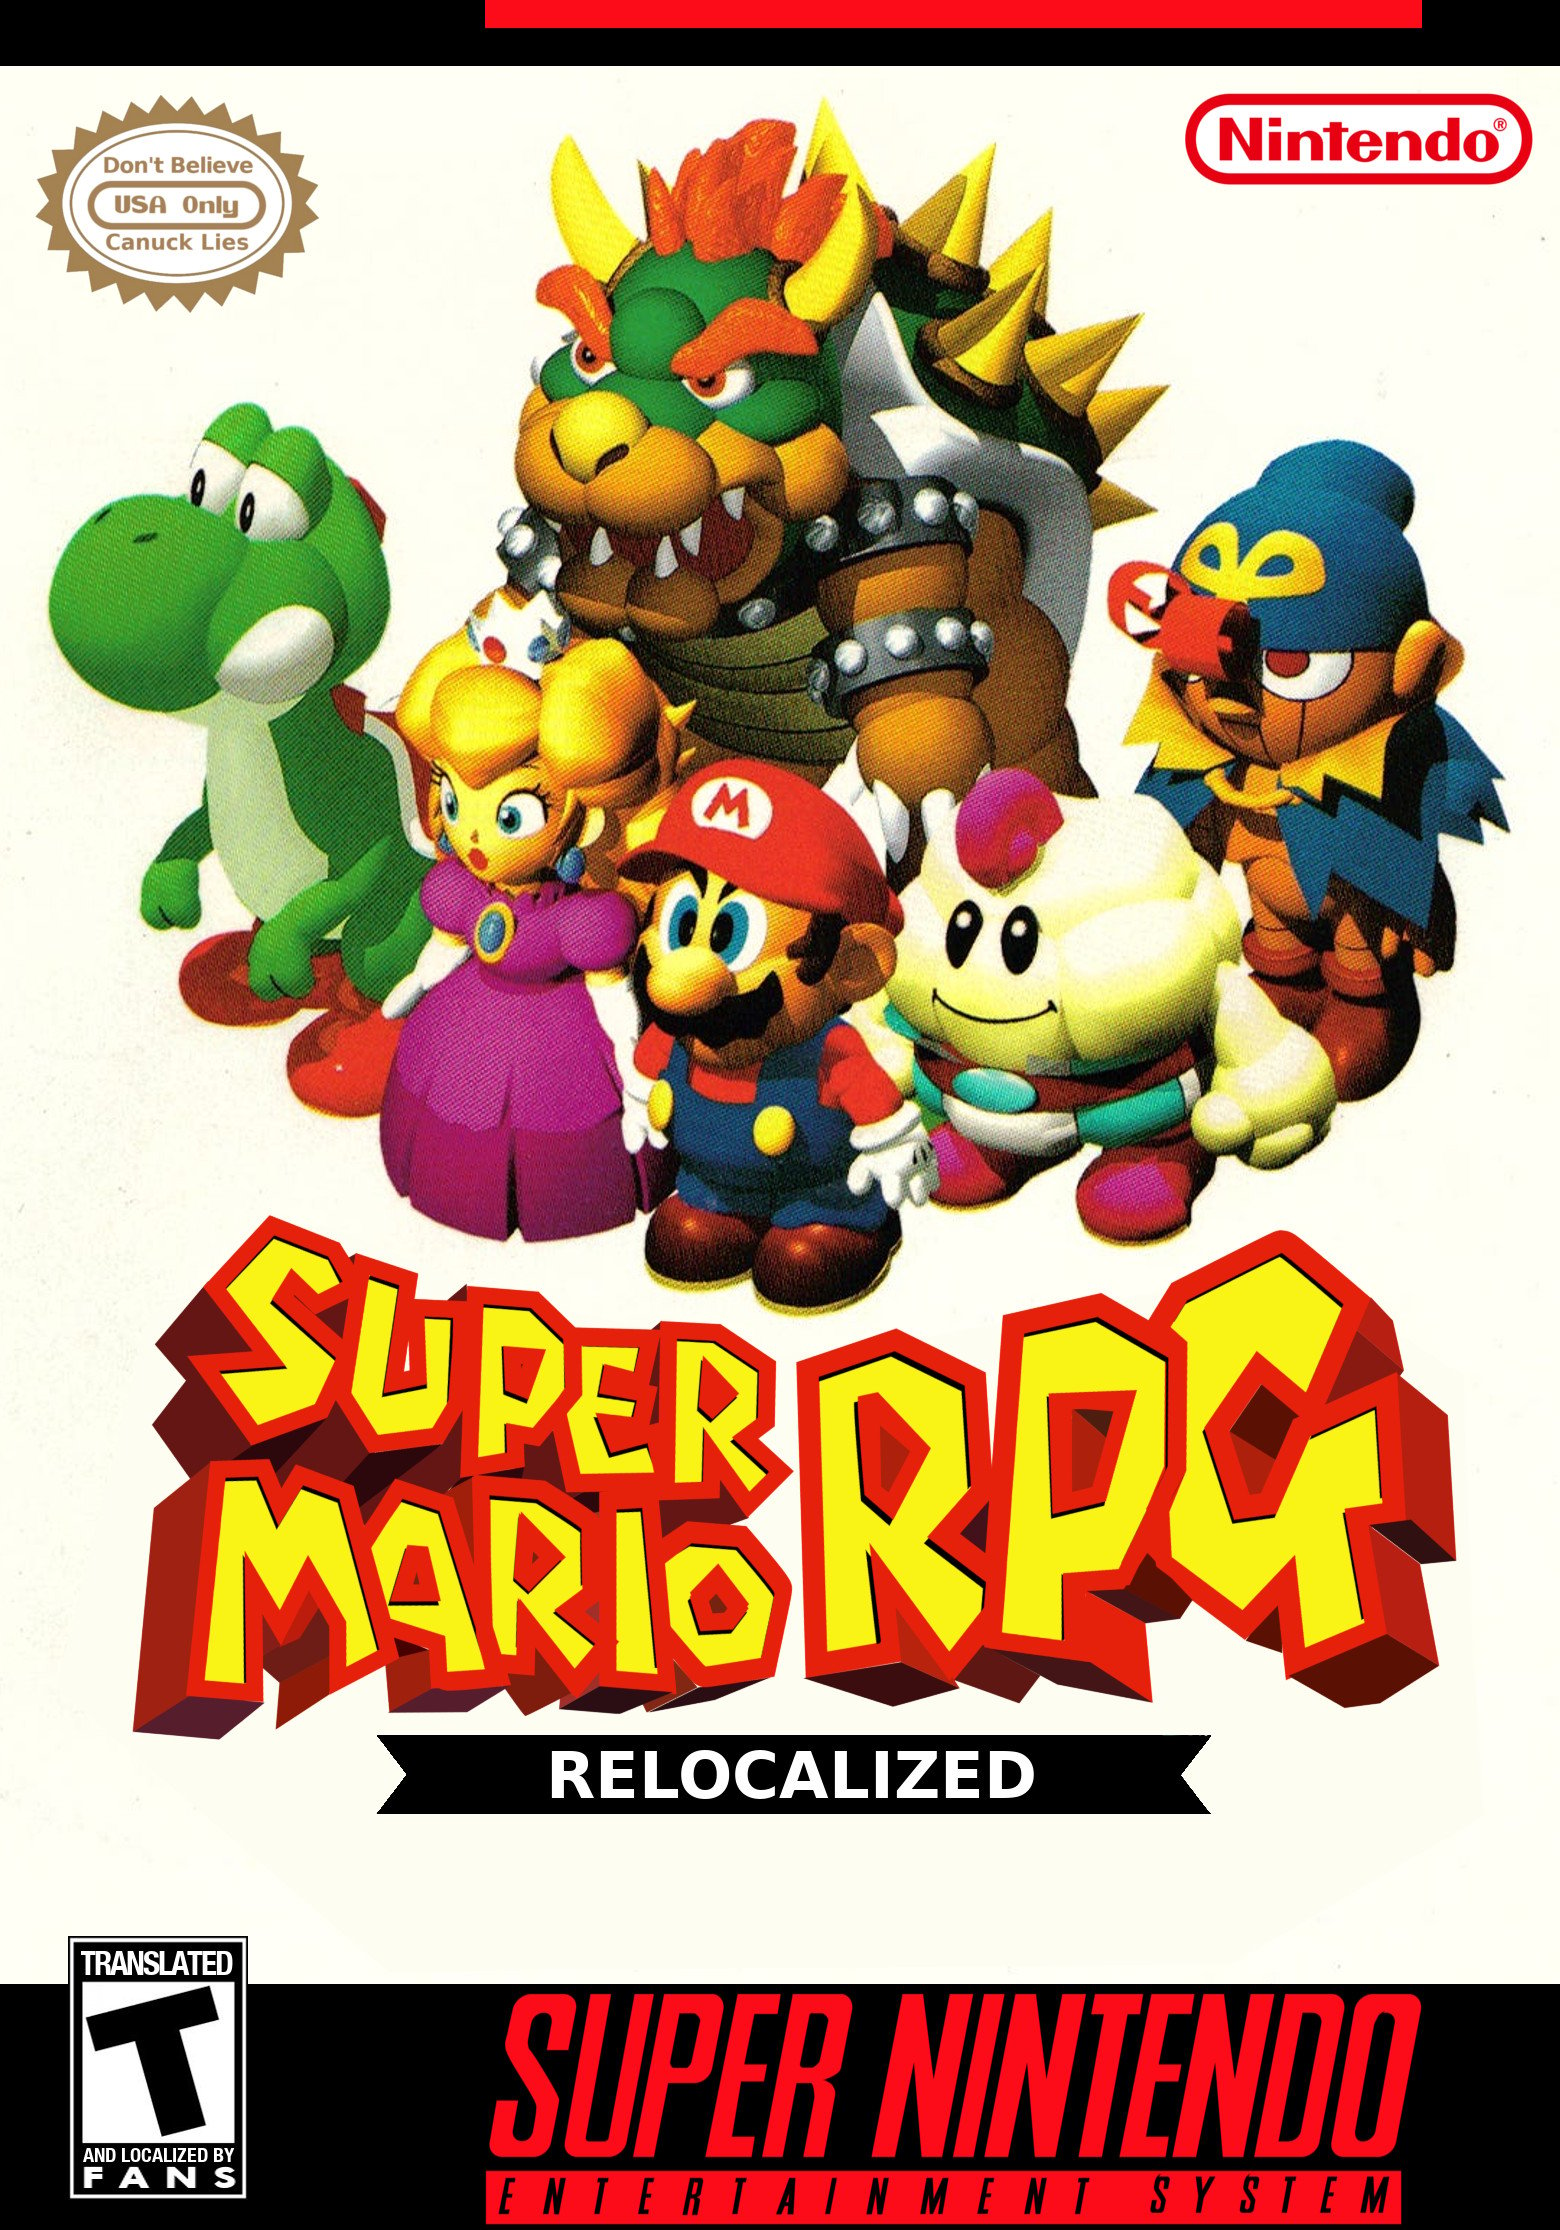 Super Mario RPG: Relocalized